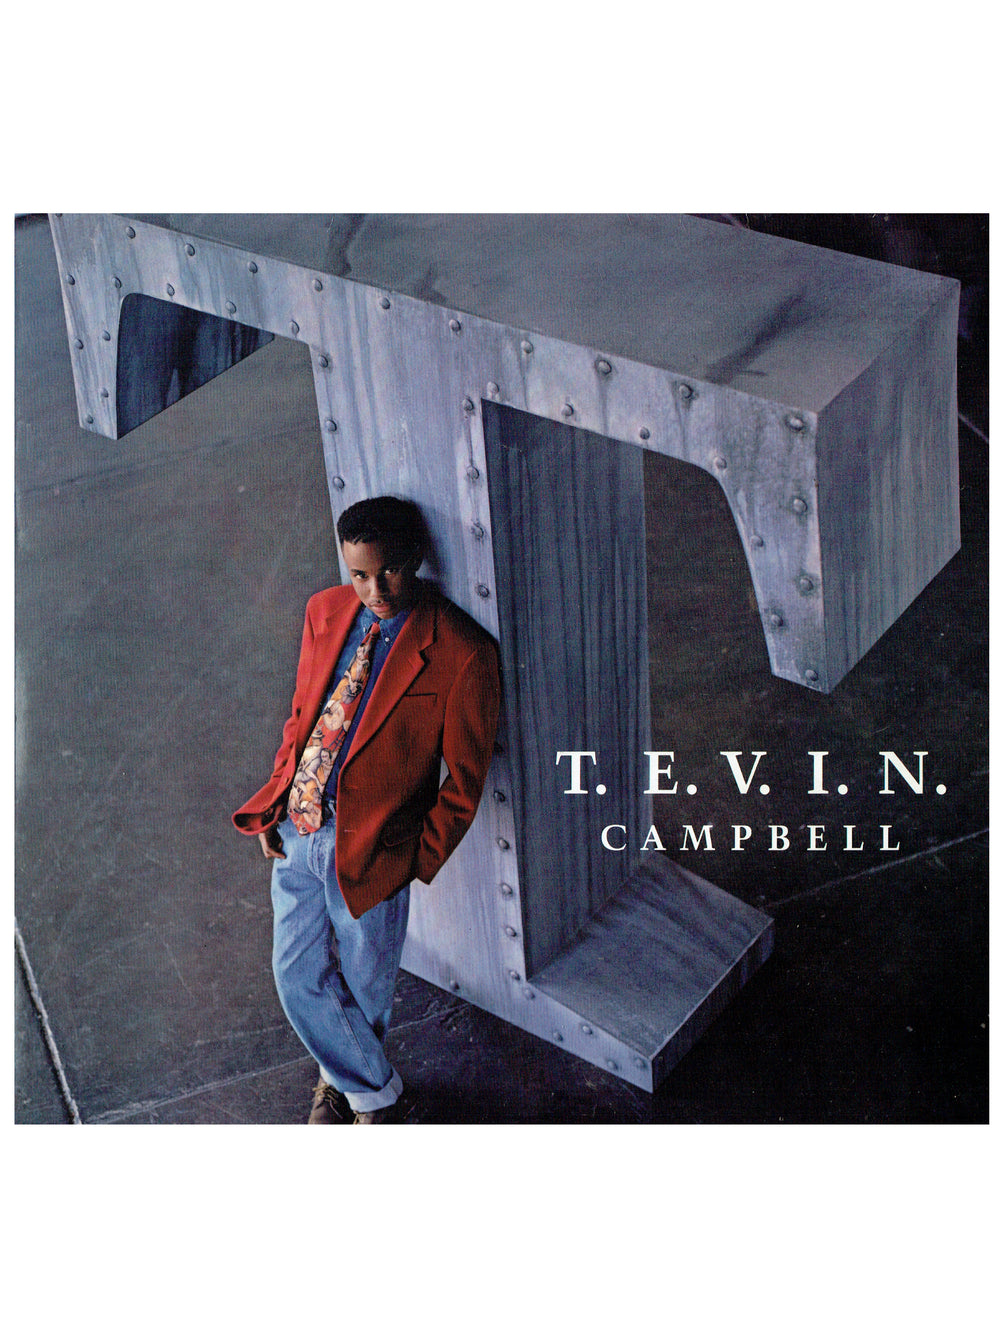 Prince – Tevin Campbell T.E.V.I.N. Vinyl Album Original 1991 UK/EUROPE Release Prince